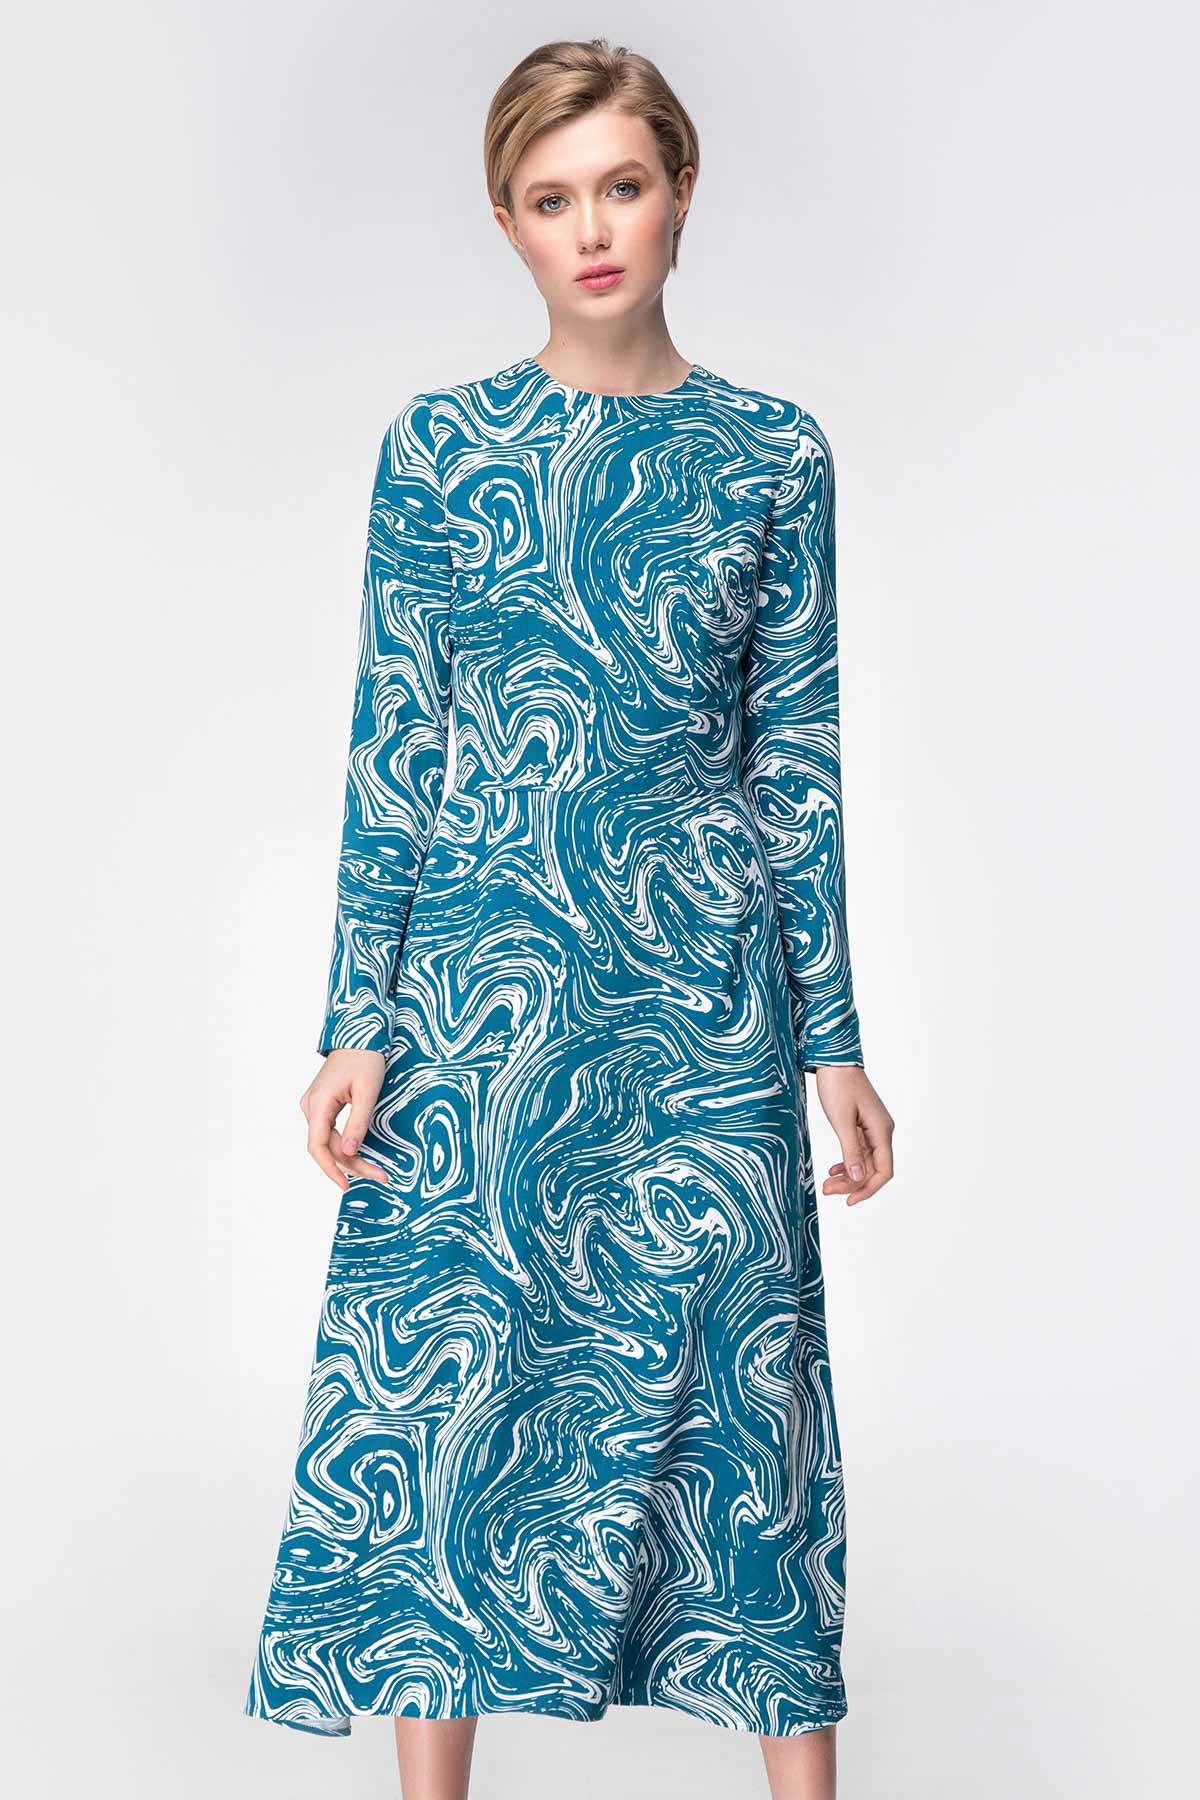 Midi dress with turquoise print, photo 3